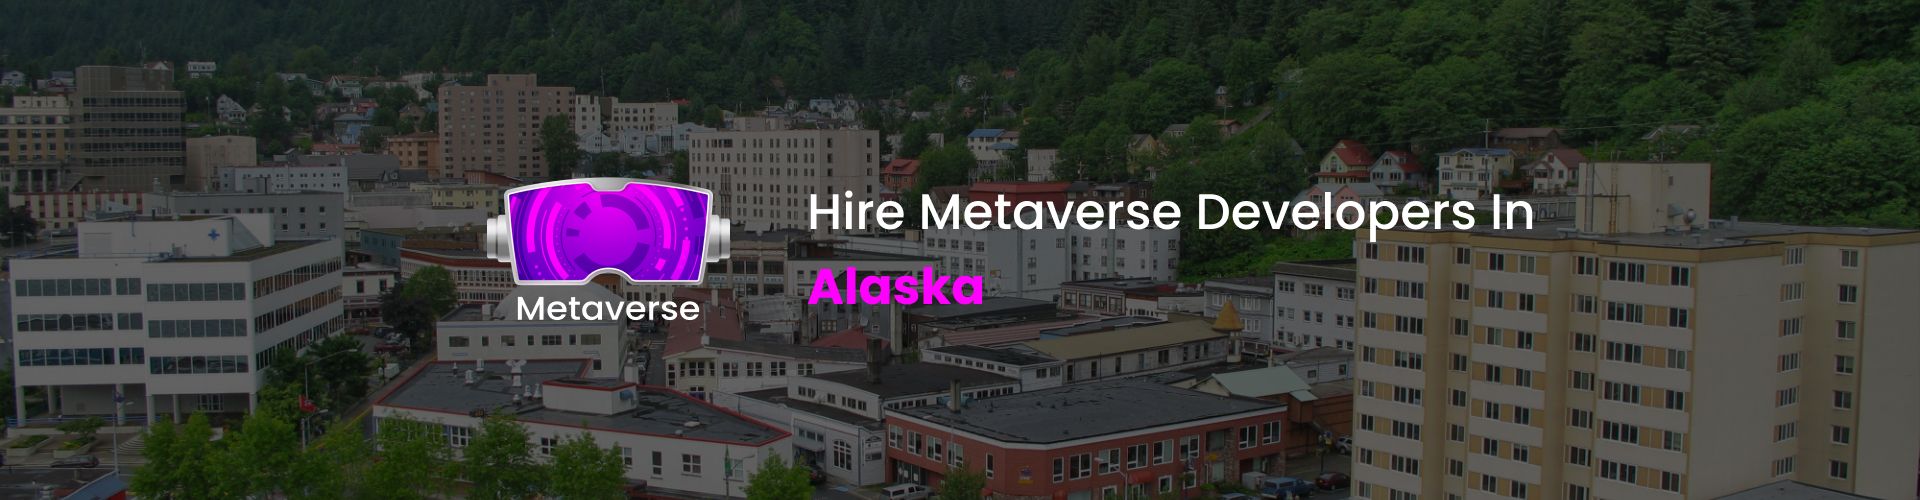 hire metaverse developers in alaska